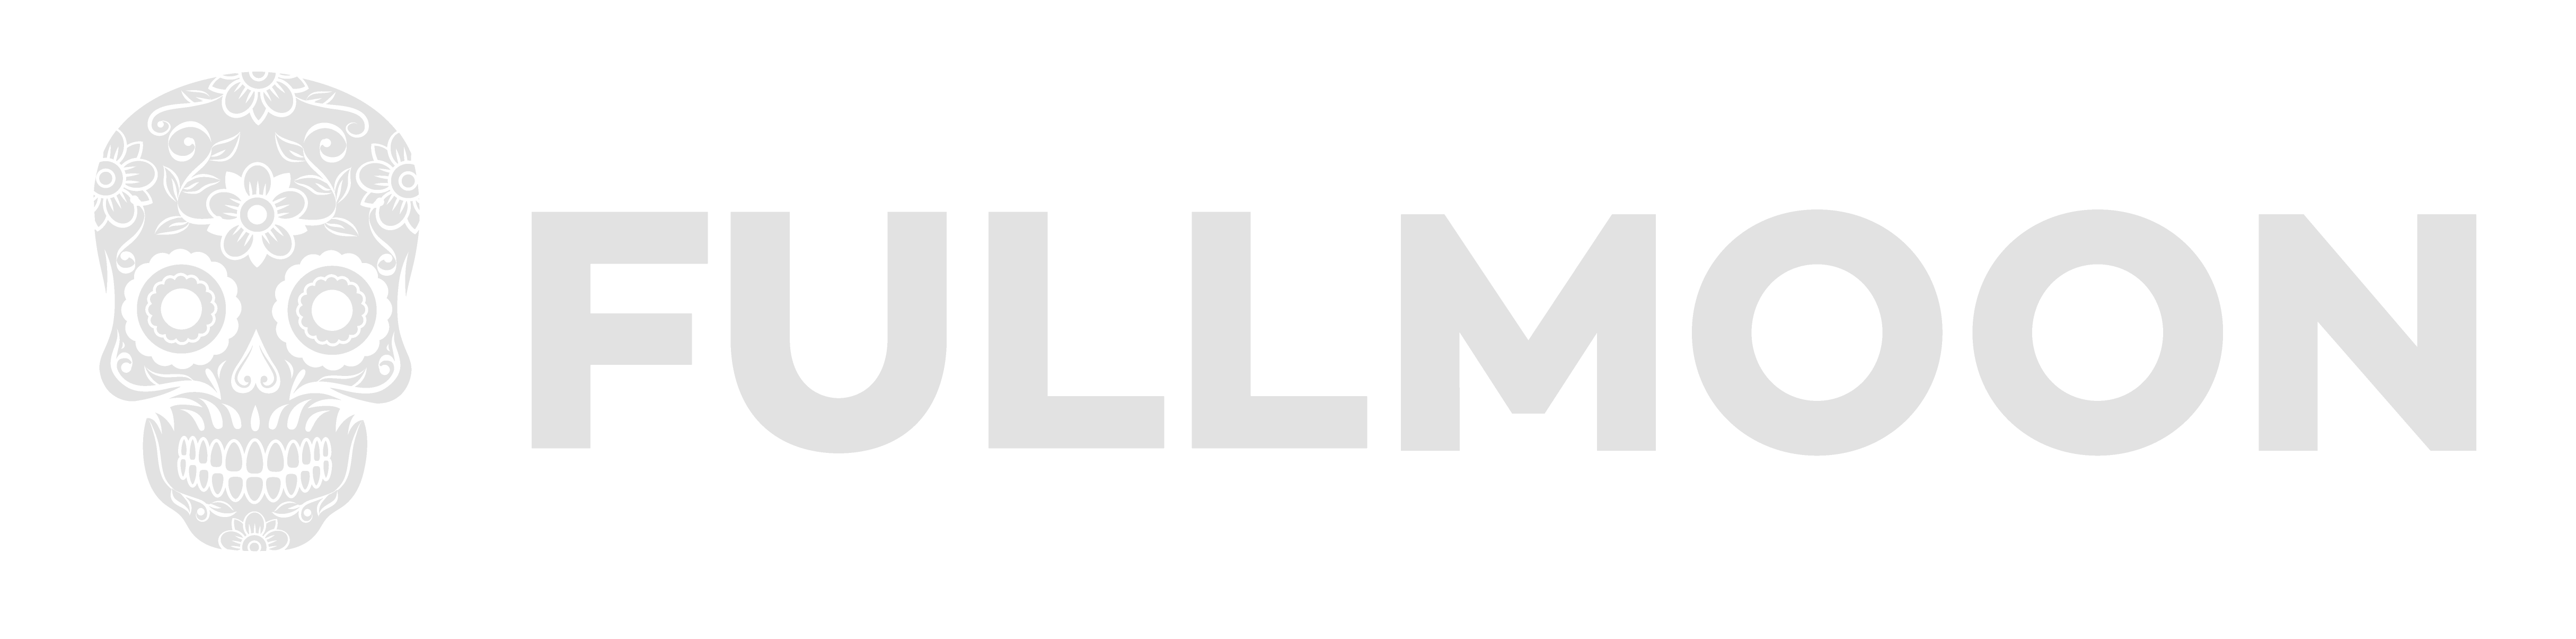 FullMoon-Logo-gris-vertical.png